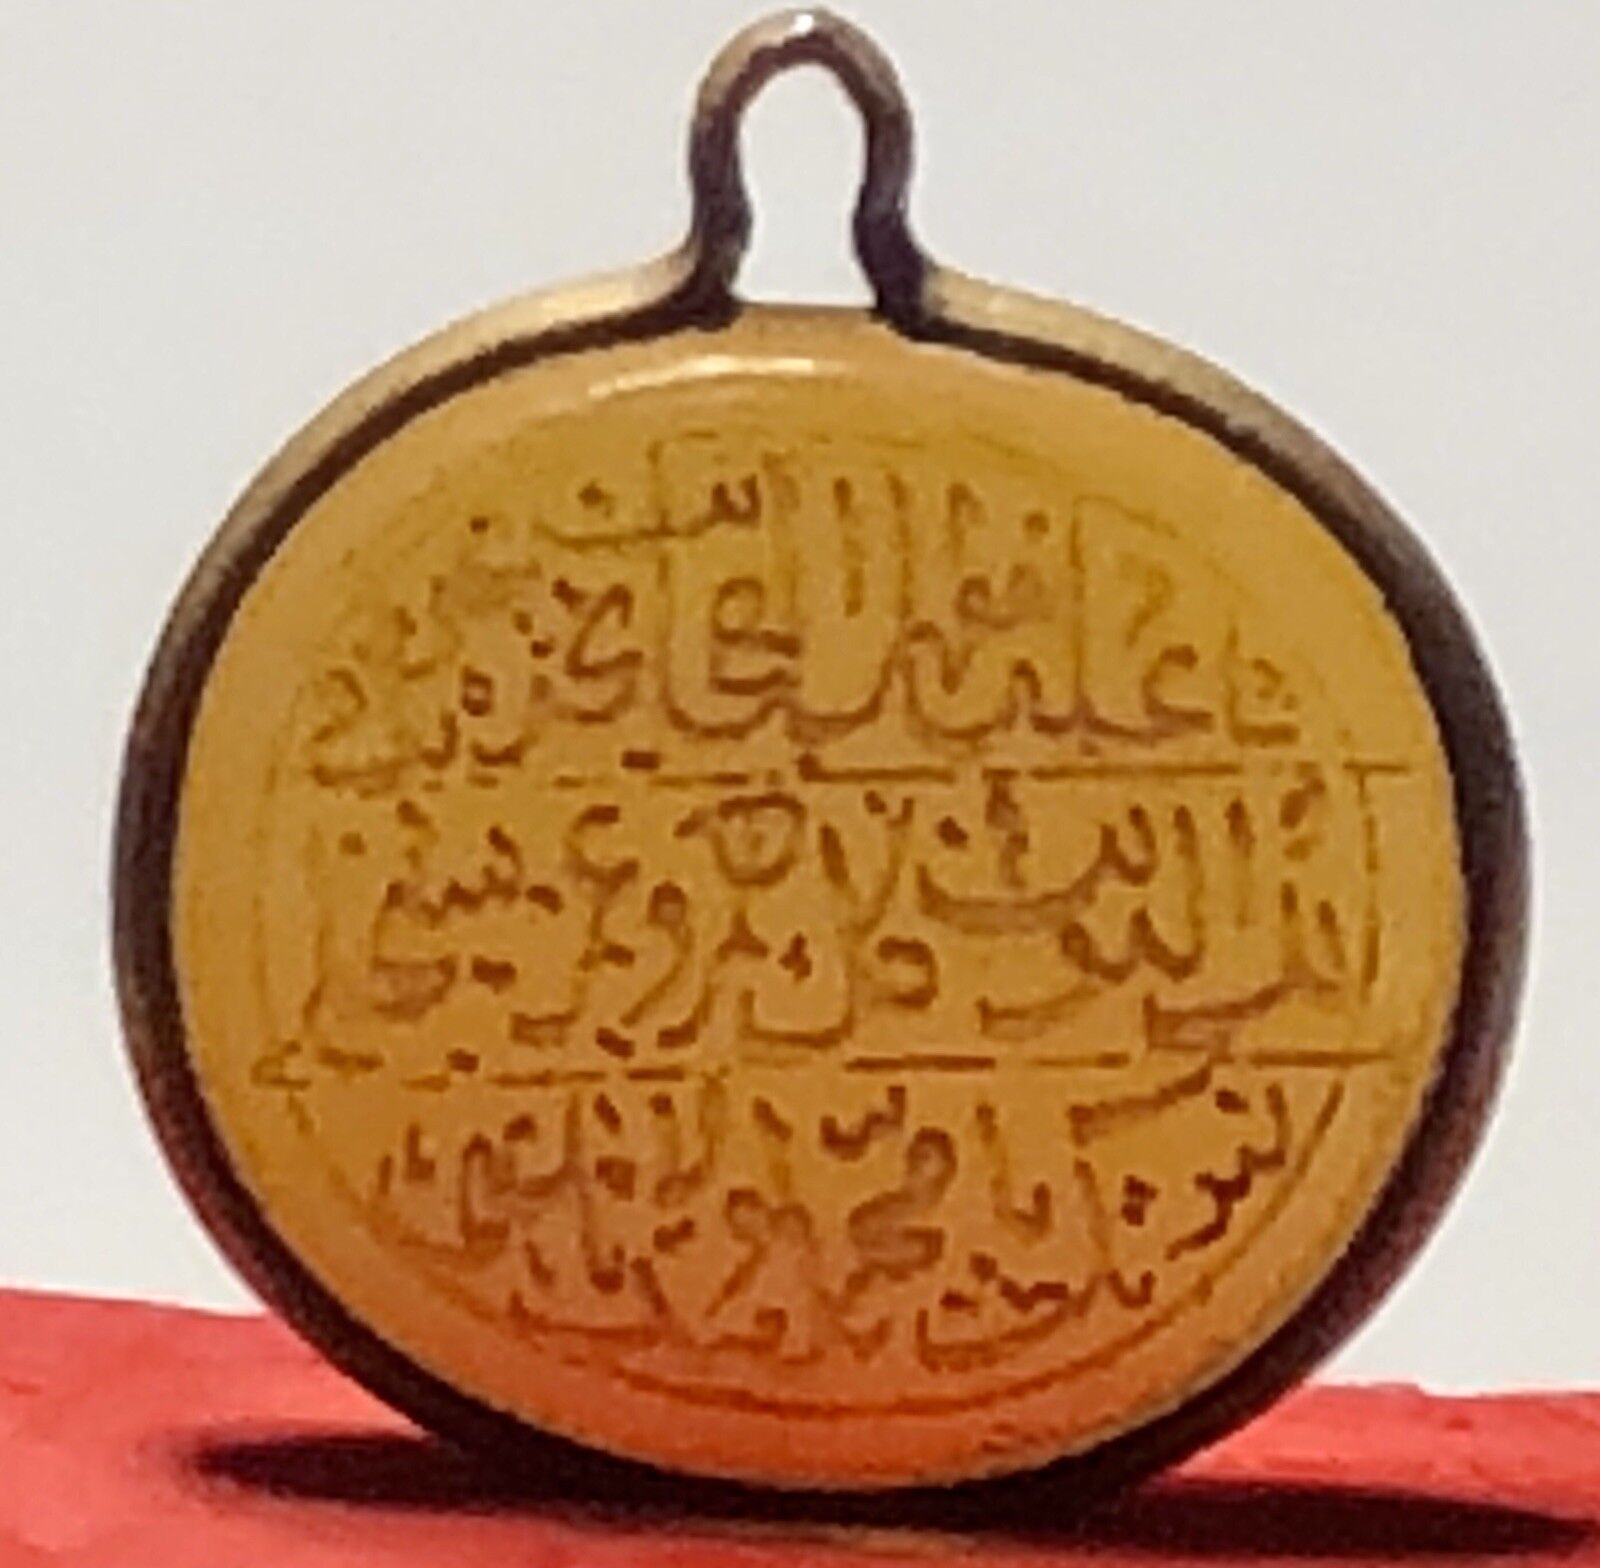 Authentic Vintage Oval Carnelian Pendant Amulet with Koranic Verse Inscription.